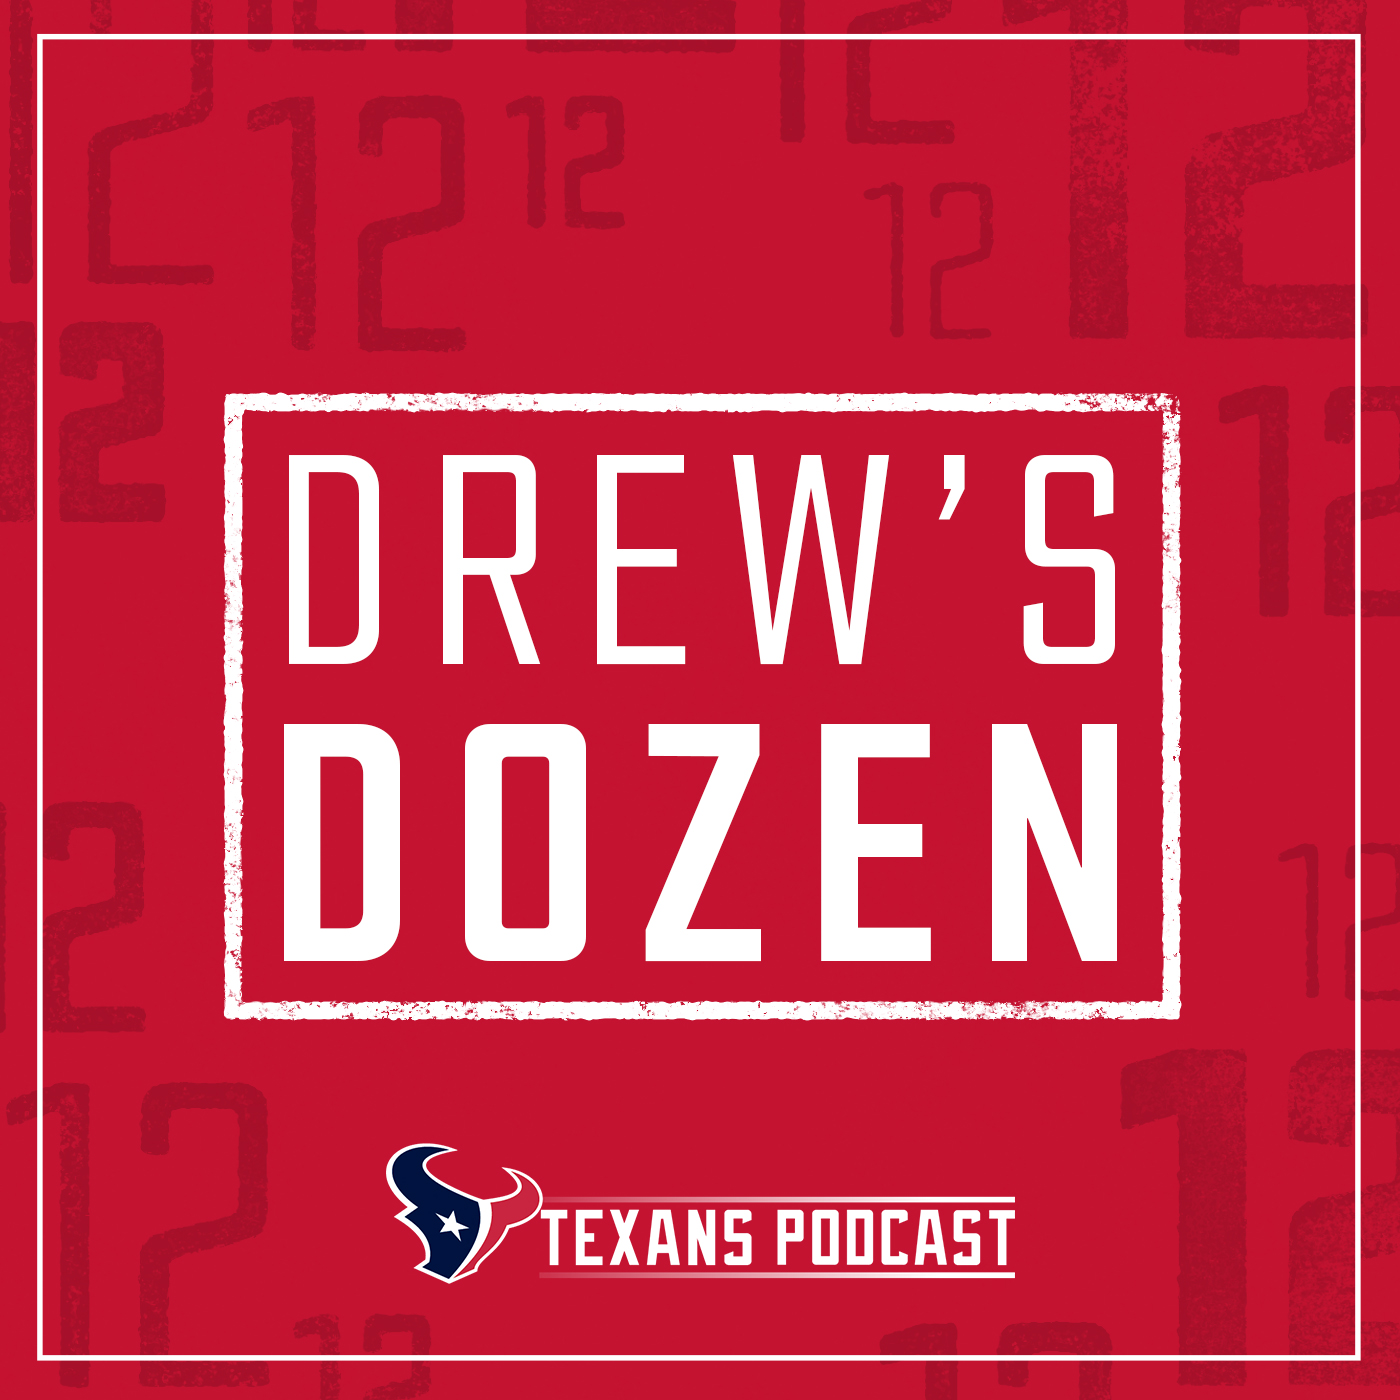 Jerry Hughes describes a few key changes for 2023 Texans | Drew's Dozen